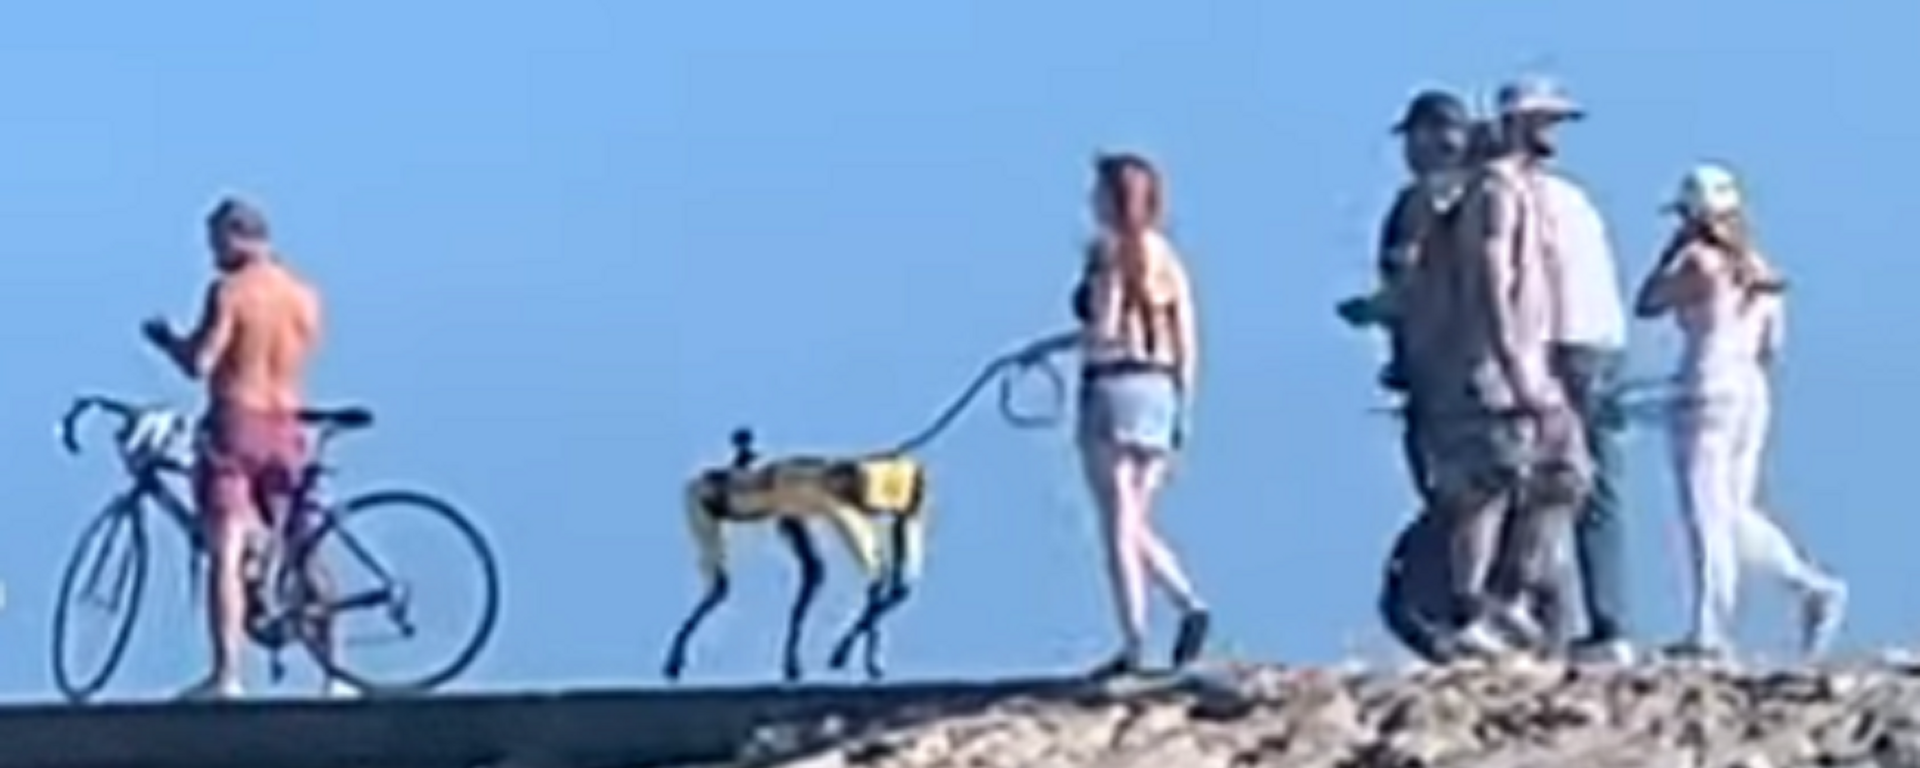 Una mujer pasea a su perro robótico - Sputnik Mundo, 1920, 13.03.2021